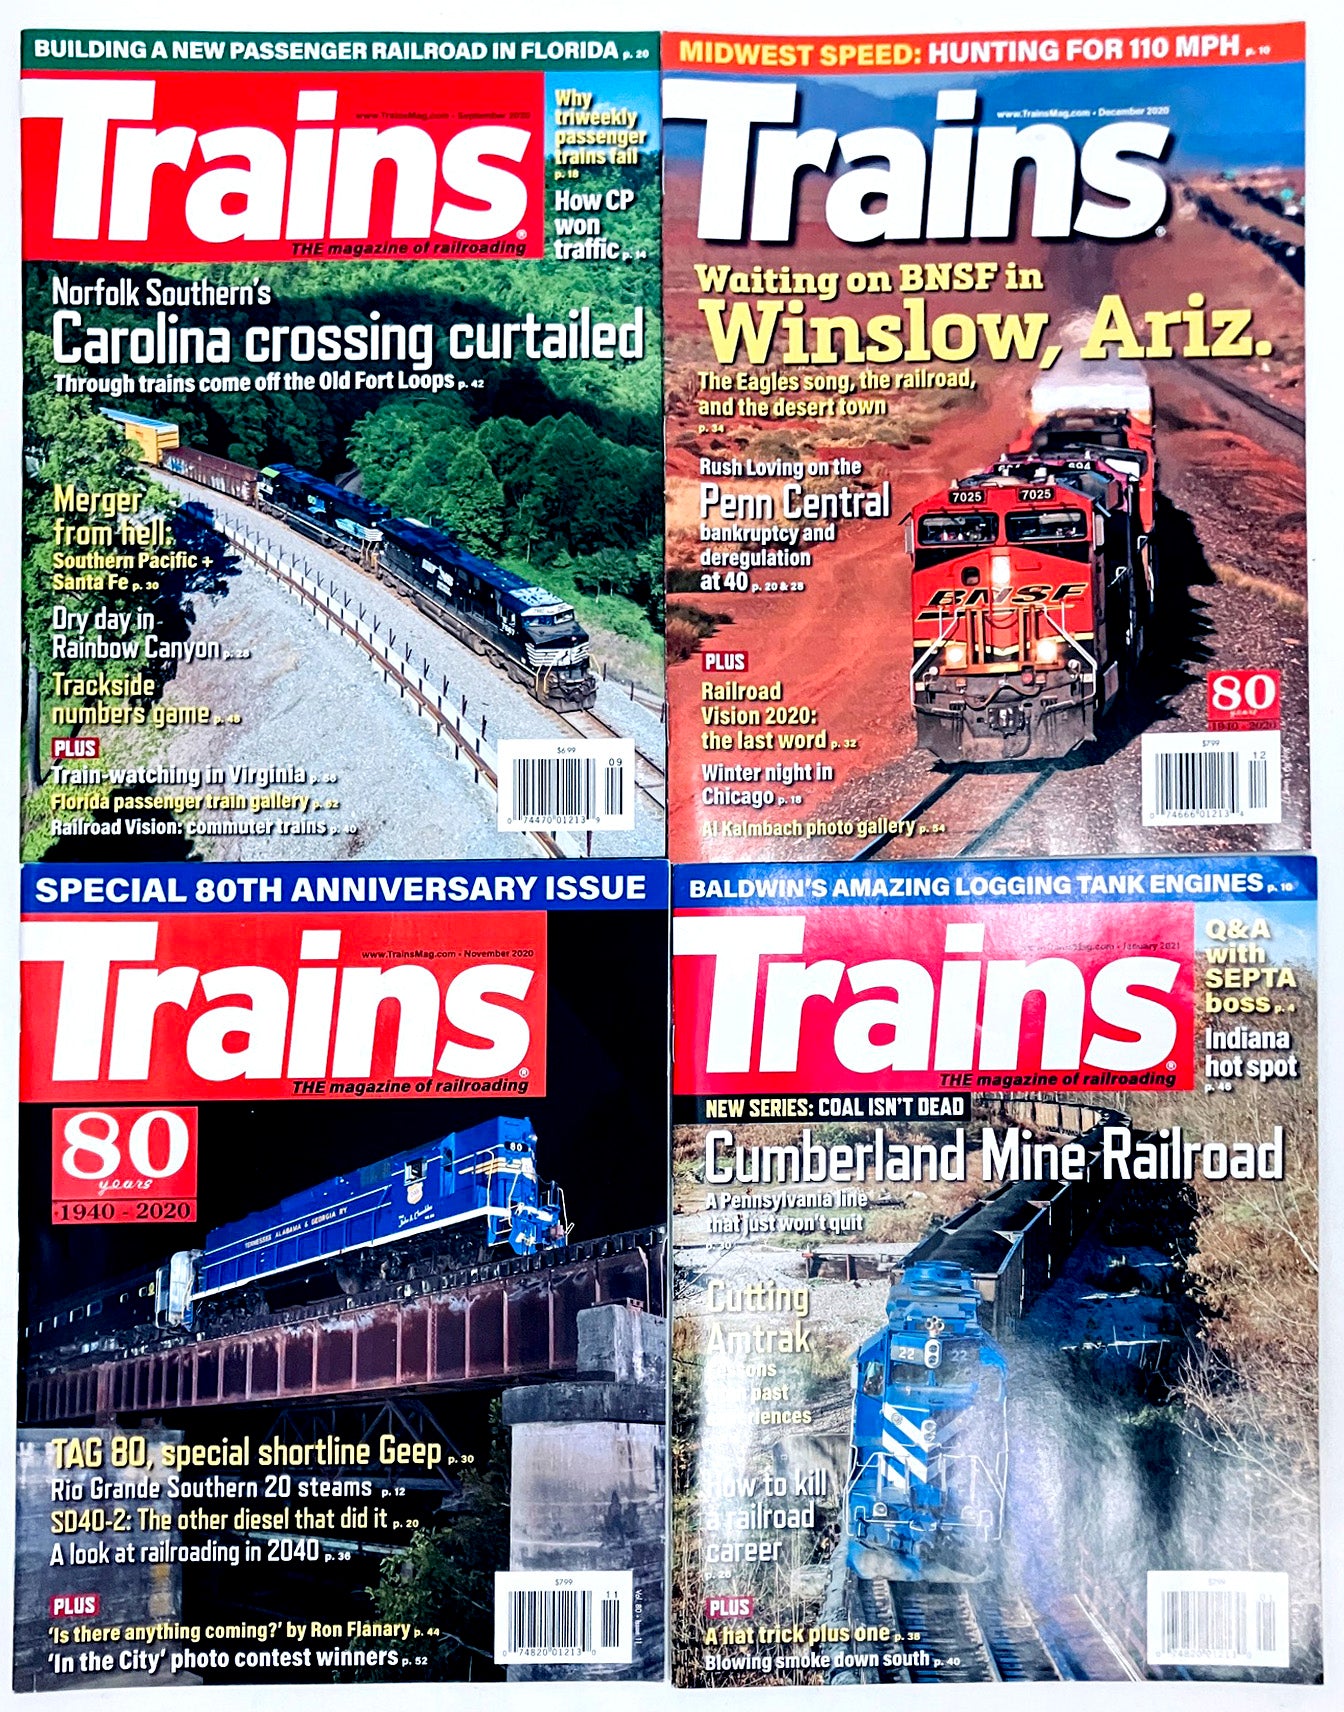 Trains Magazine Lot 2020/2021 TMZ002 SALE!